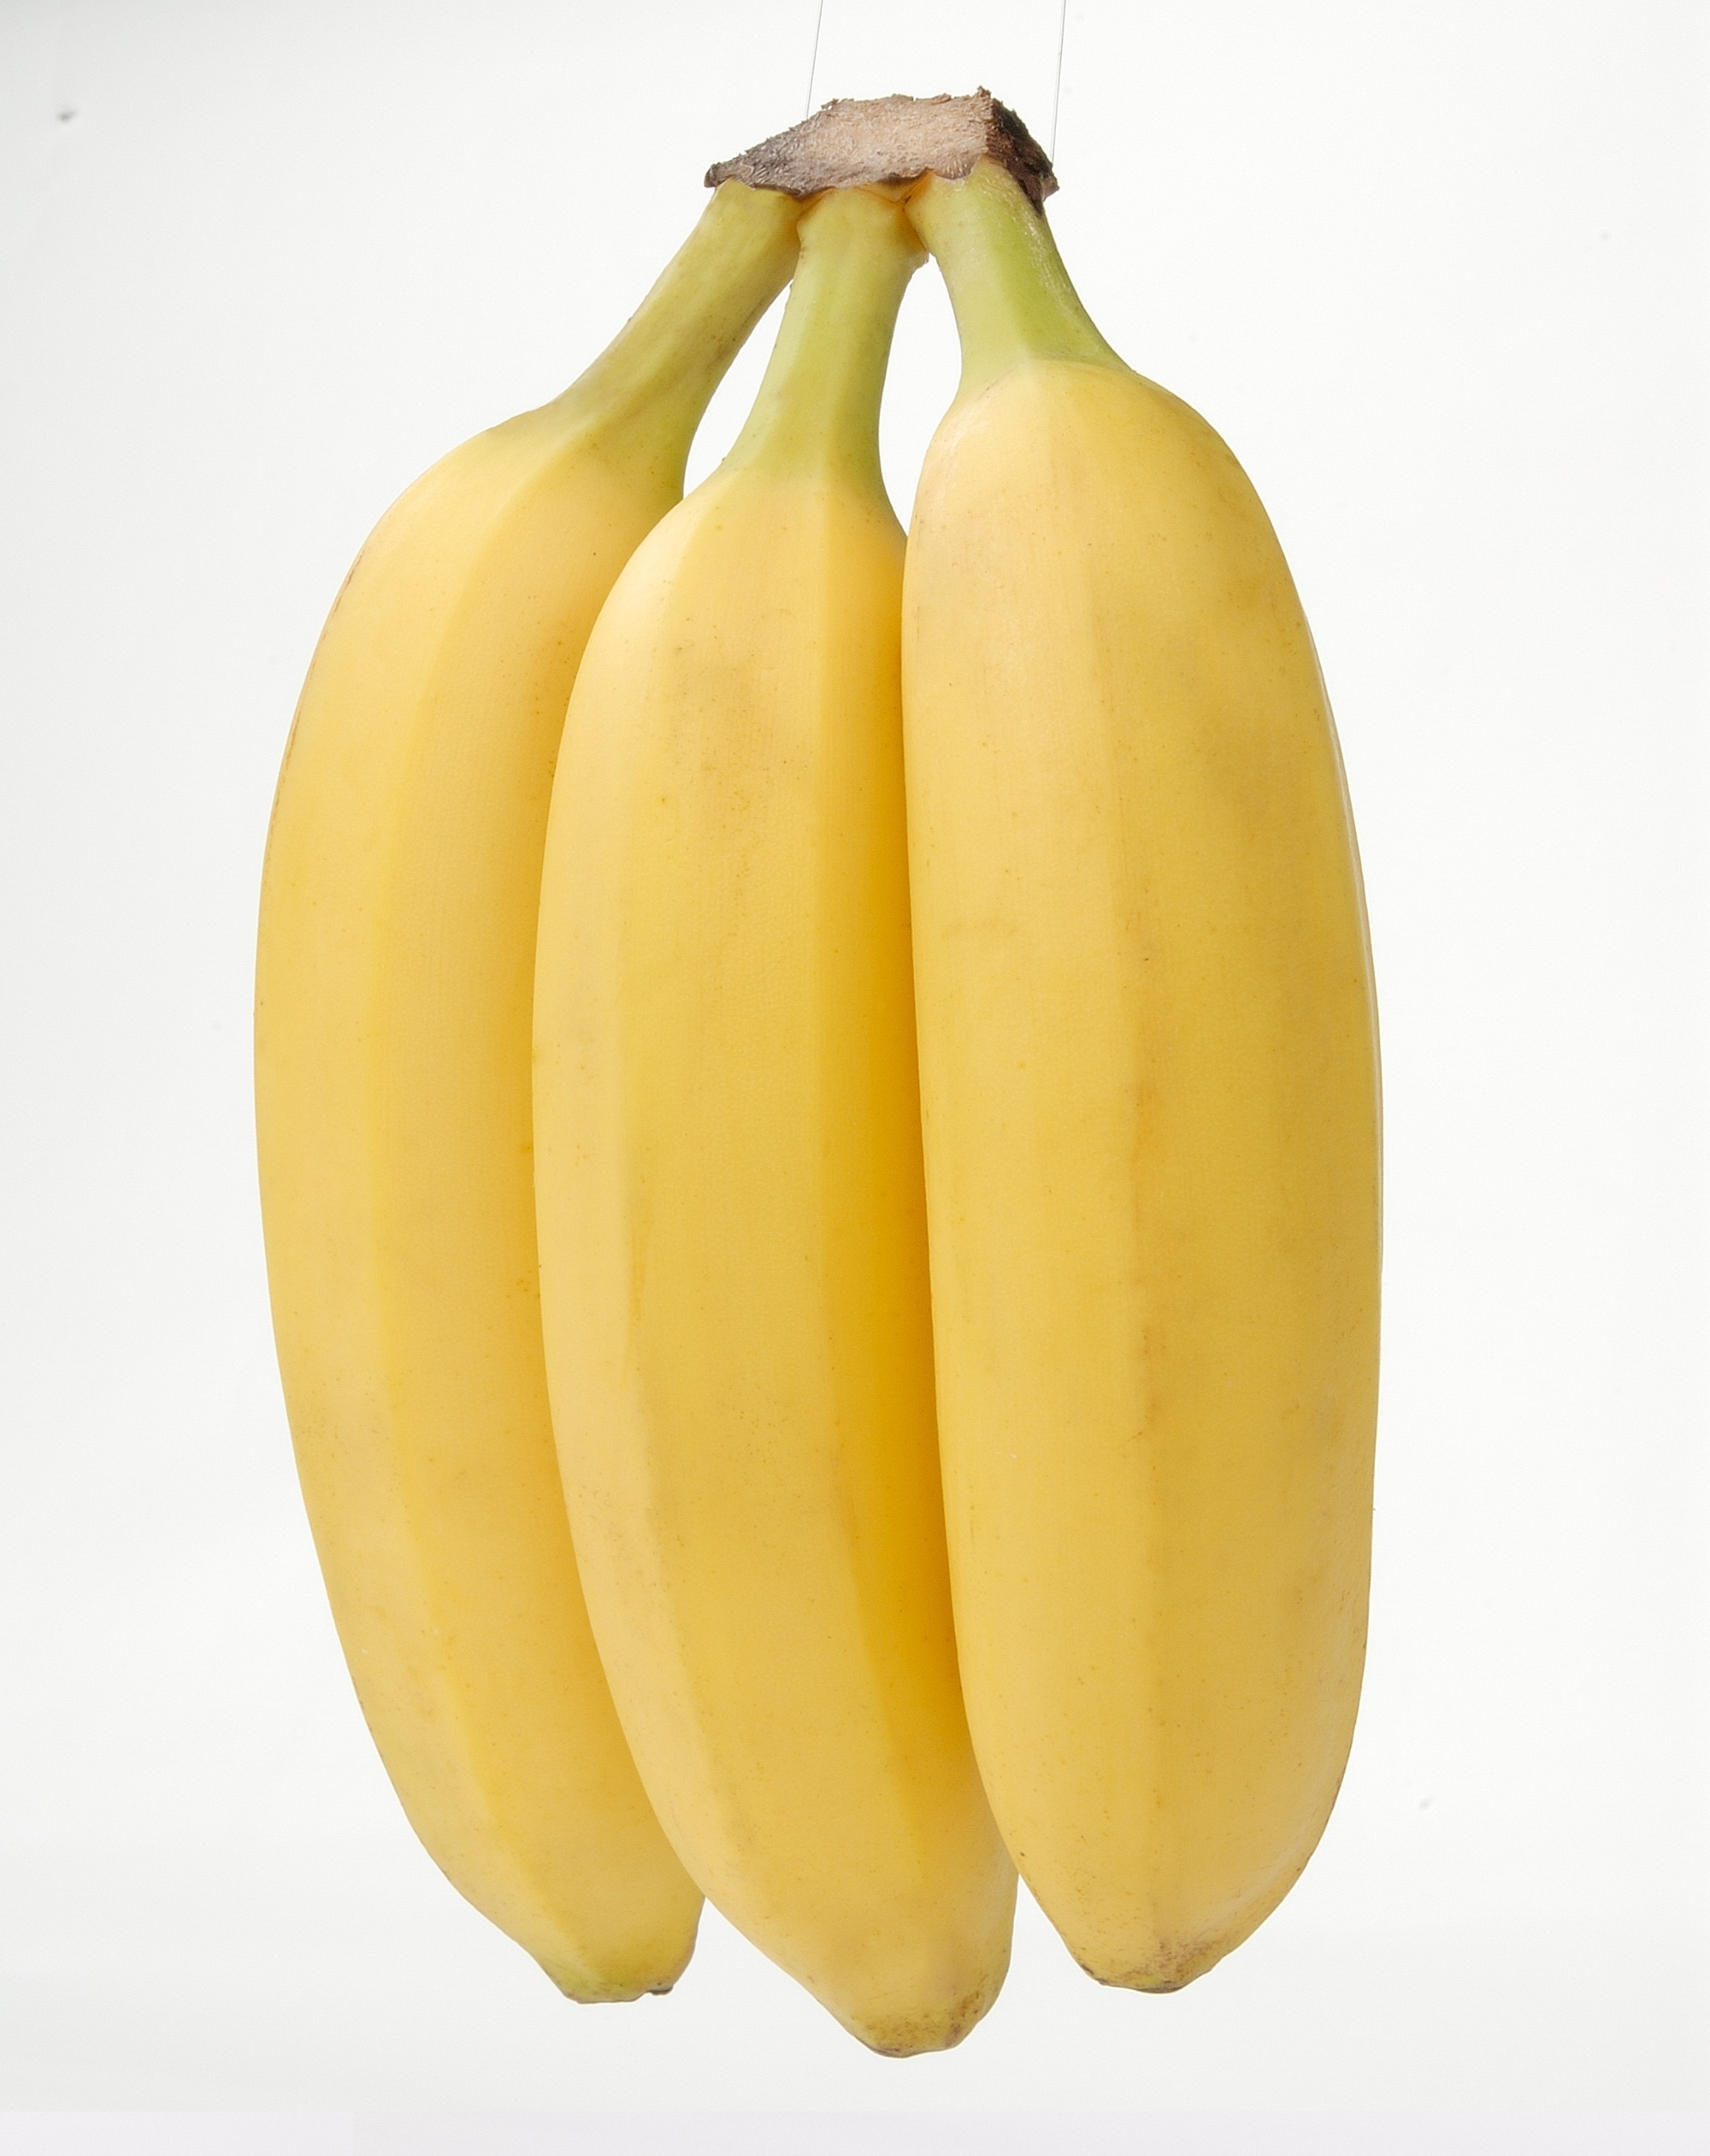 3 yellow bananas